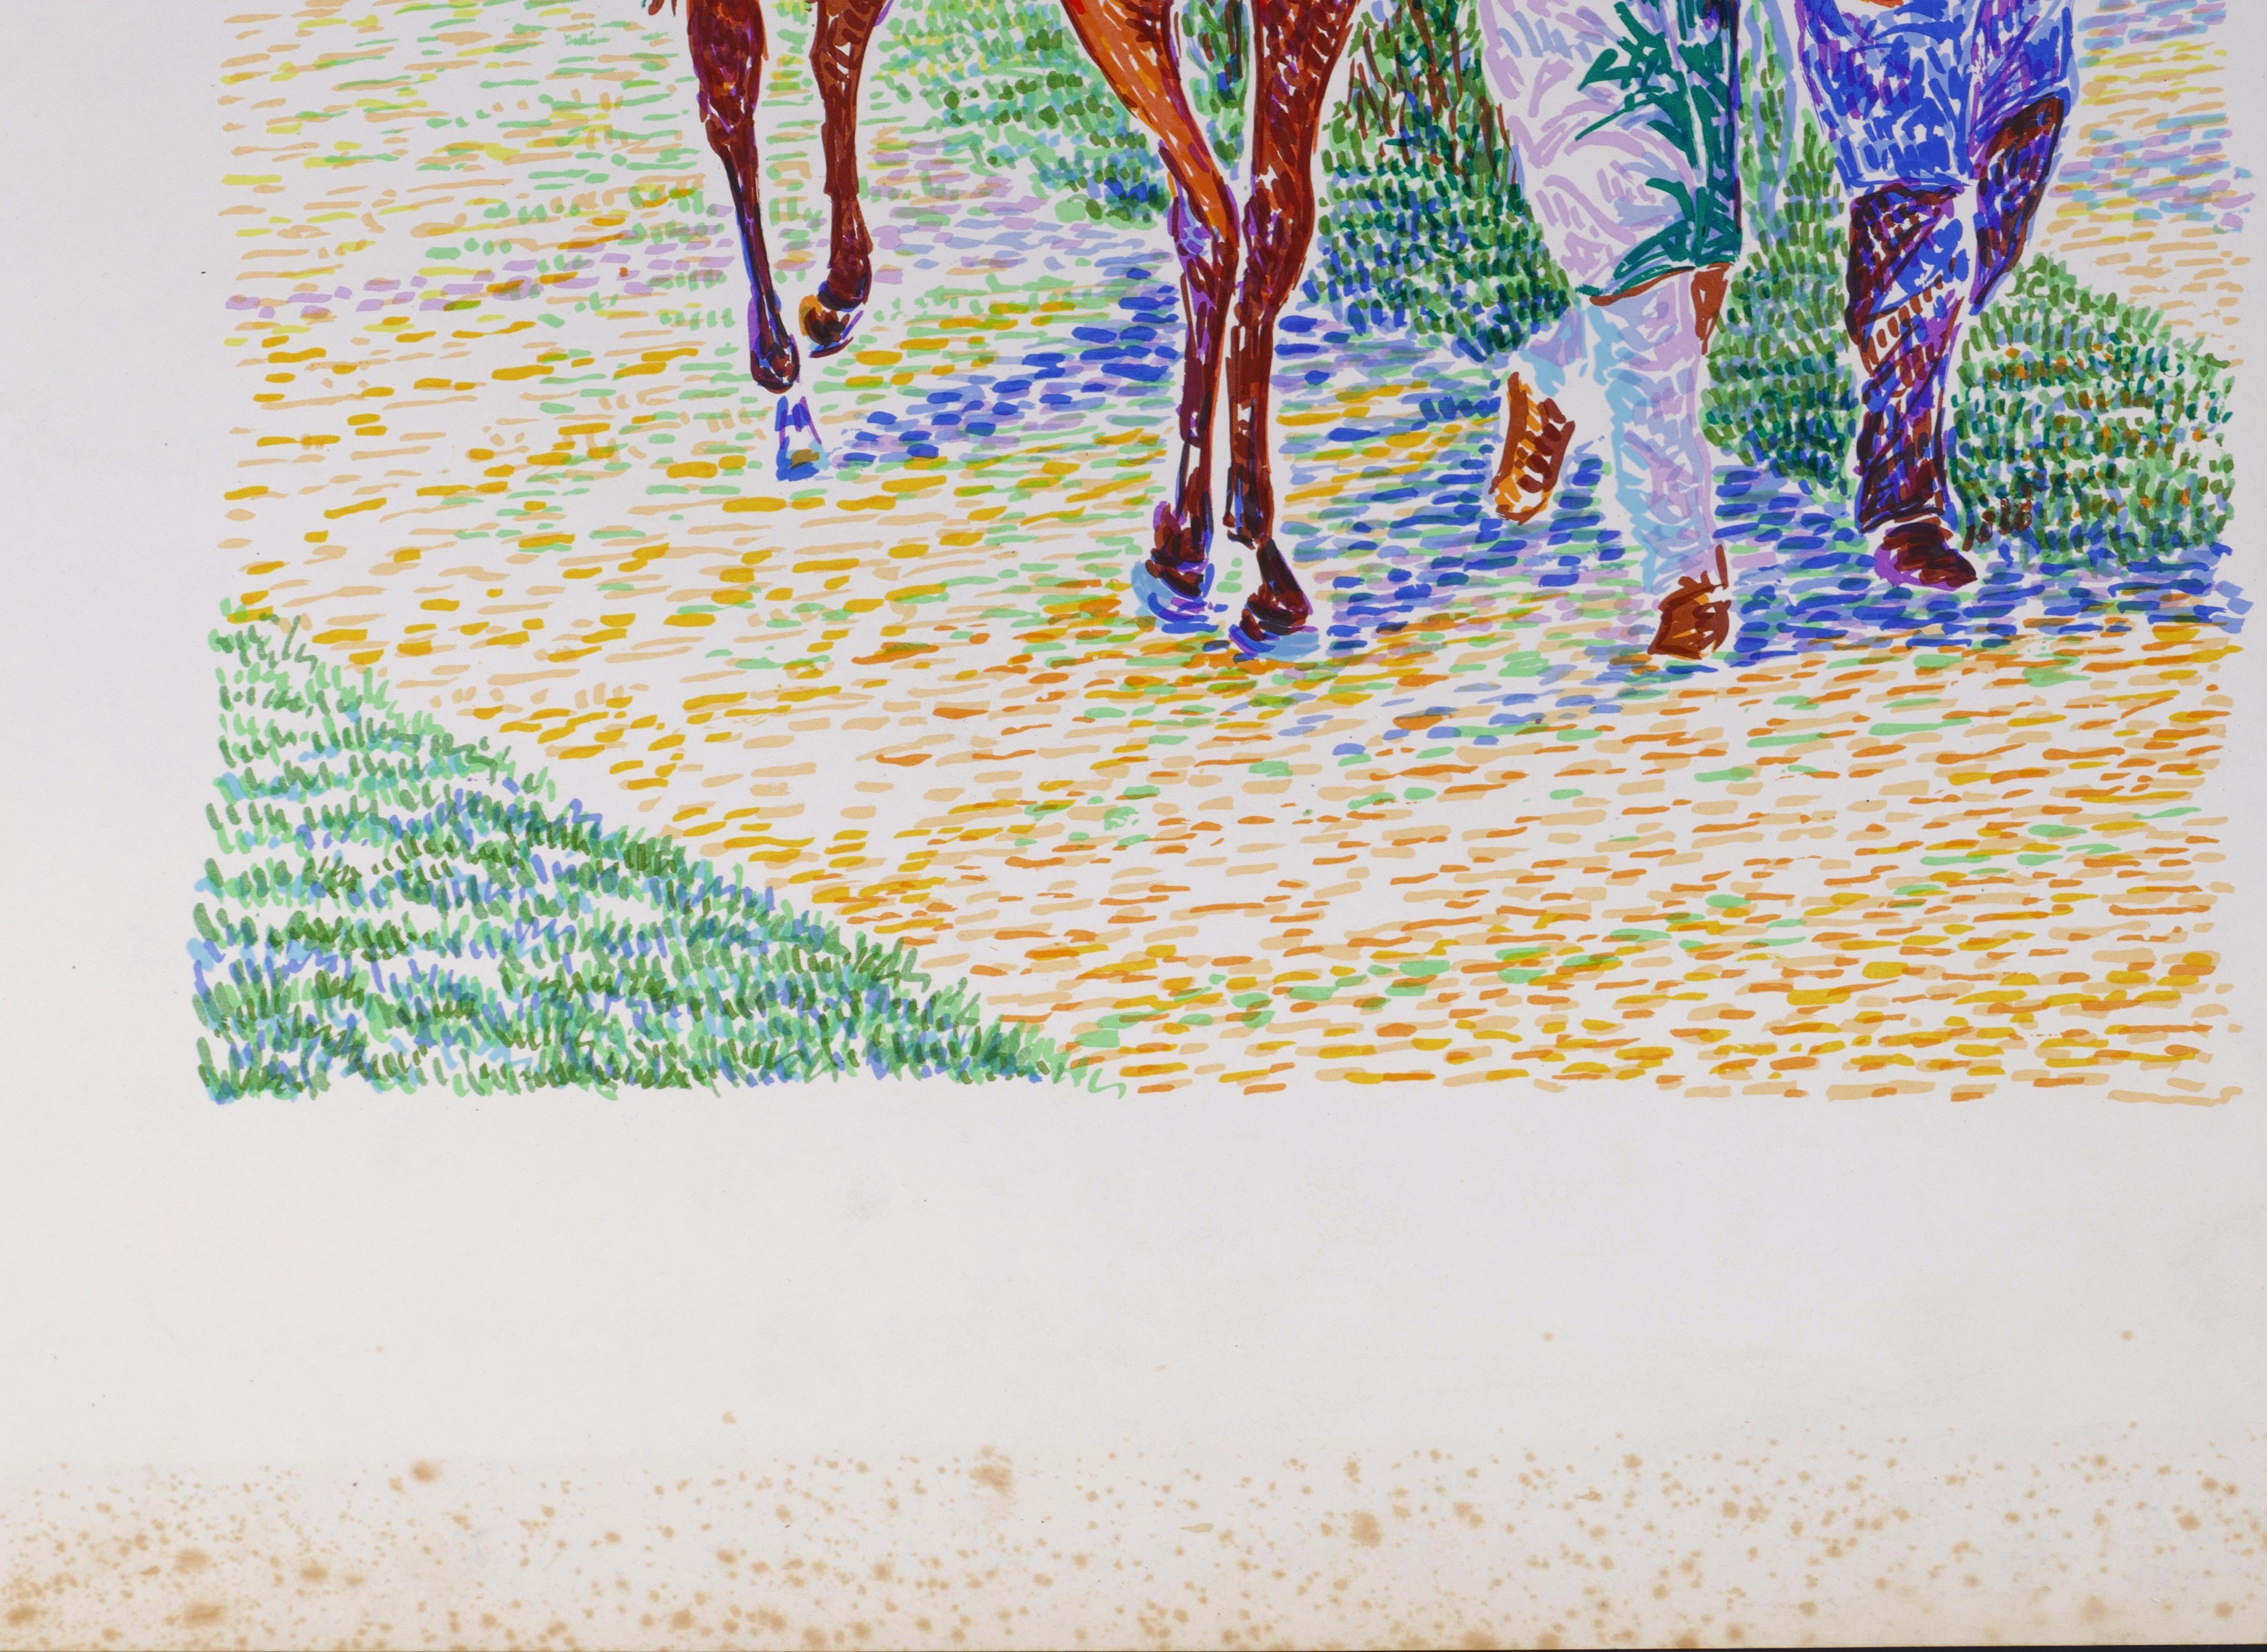 Jockey no. 9  On Horseback - Lithograph by S. Mendjisky - 1970s - Contemporary Print by Serge Mendjisky